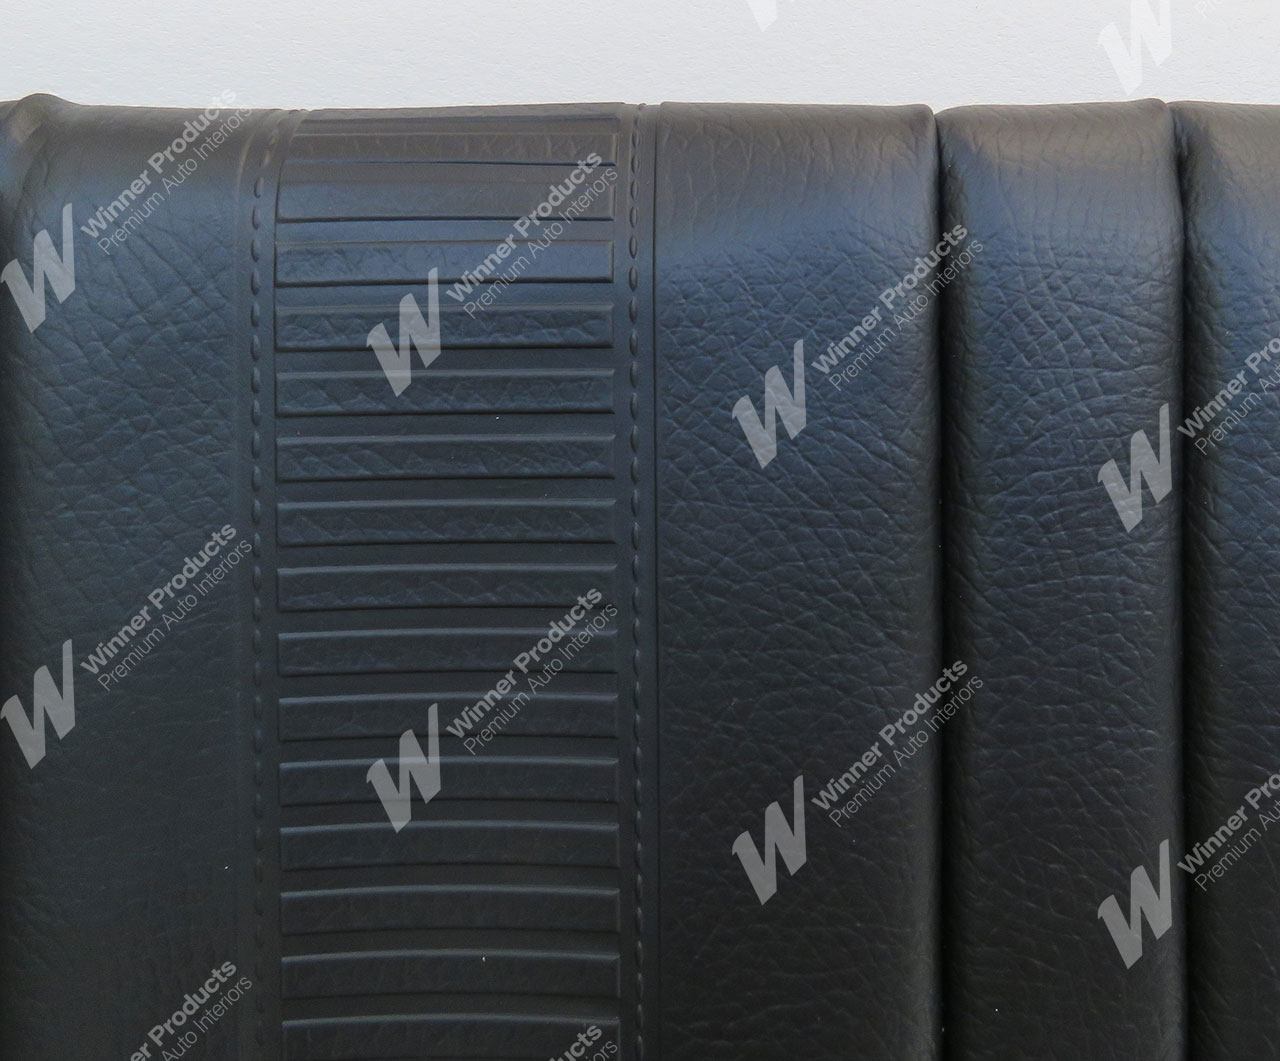 Valiant Regal VG Valiant Regal Hardtop X1 Black Seat Covers (Image 5 of 5)